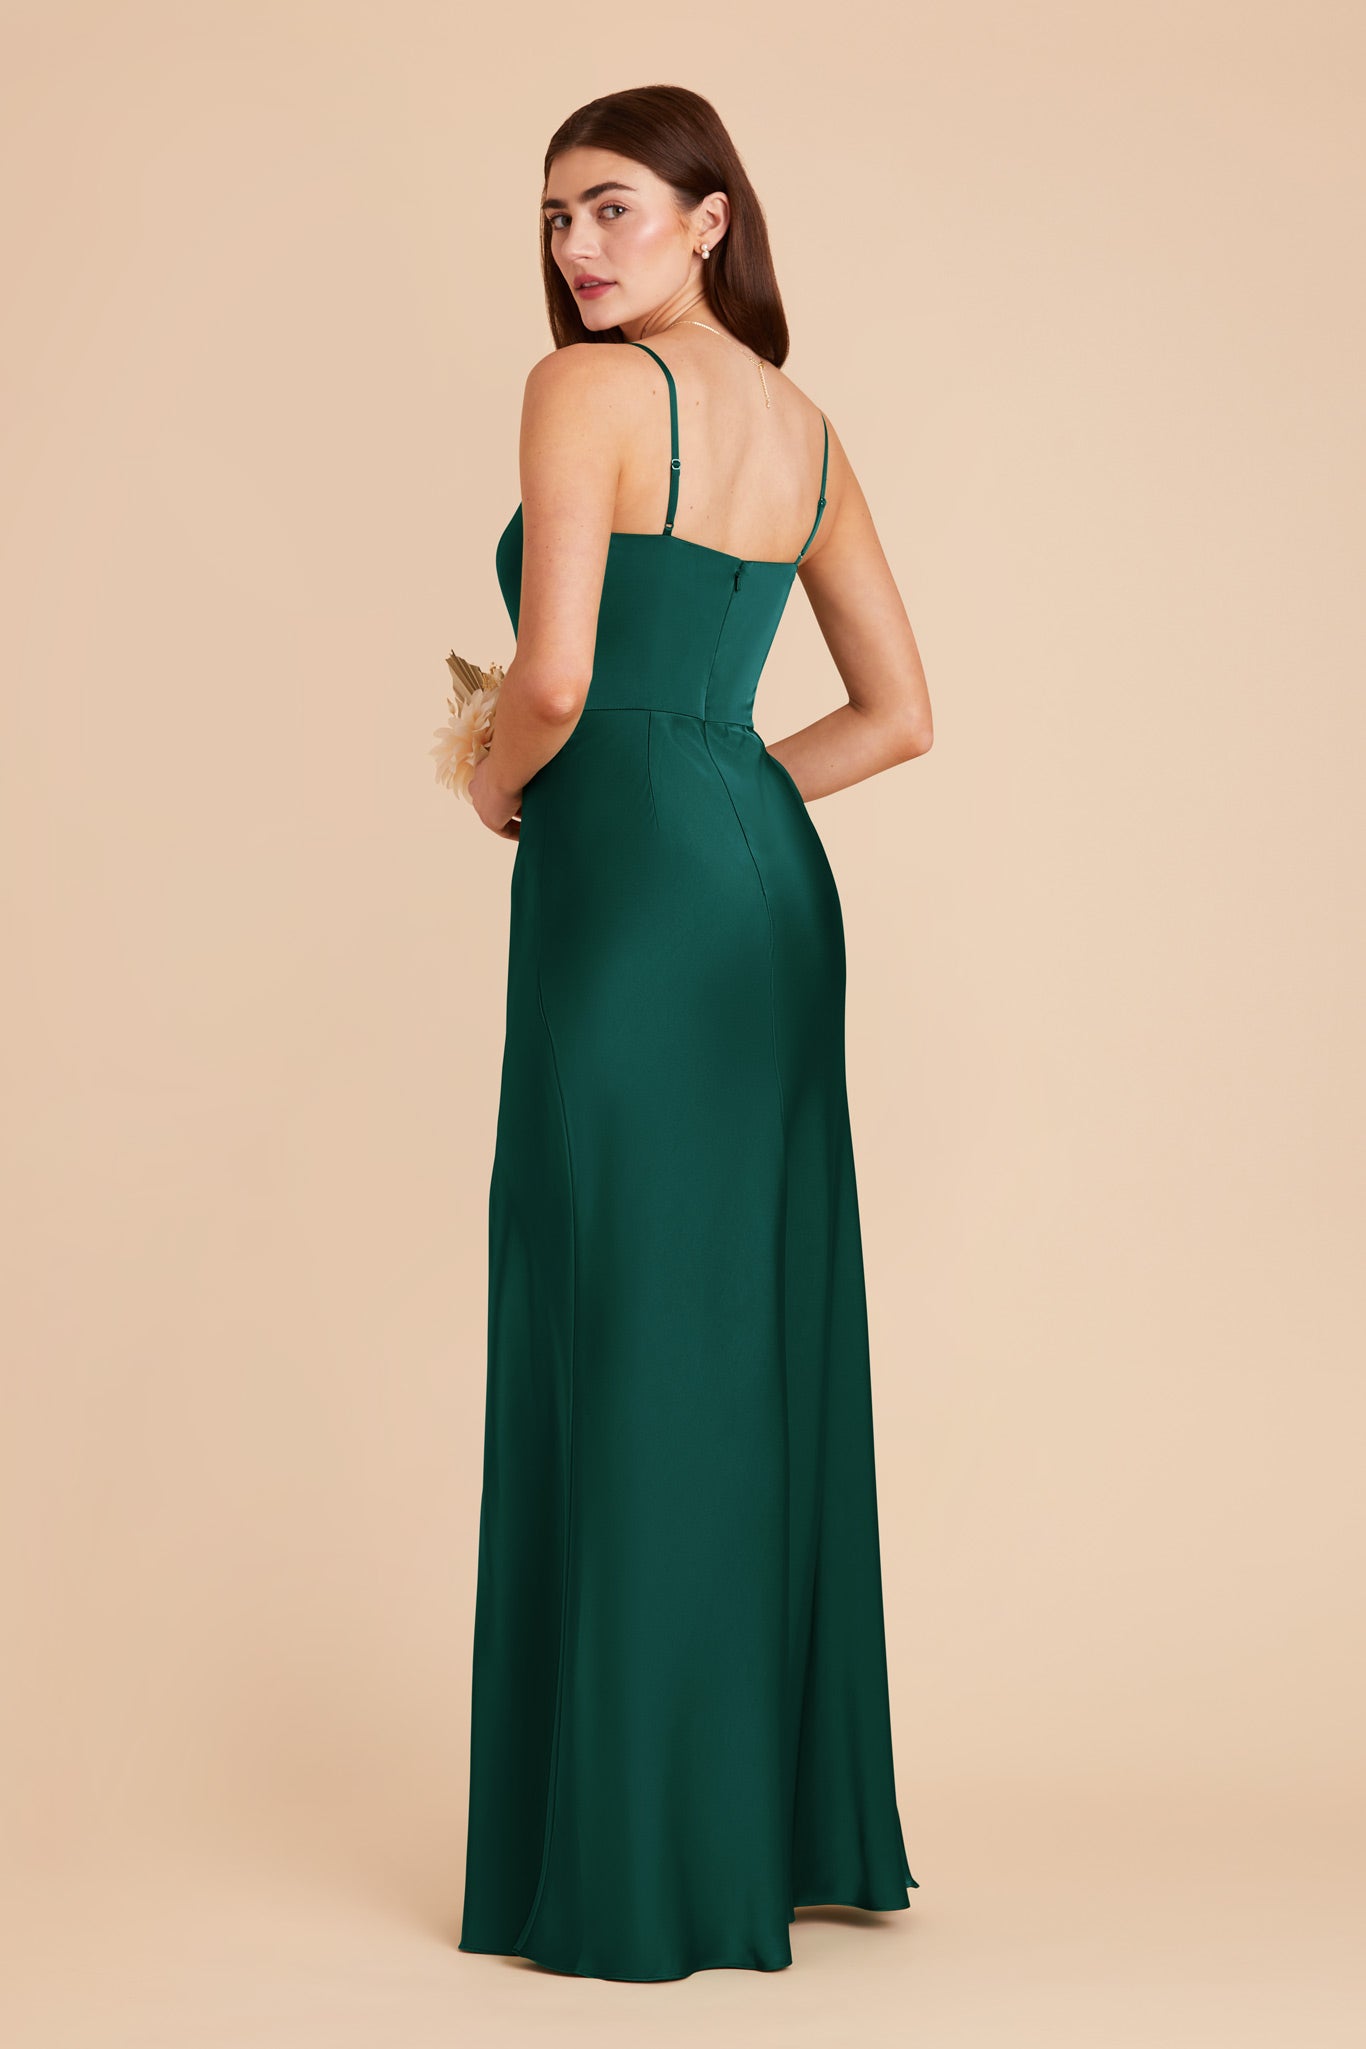 Emerald Mai Matte Satin Dress by Birdy Grey